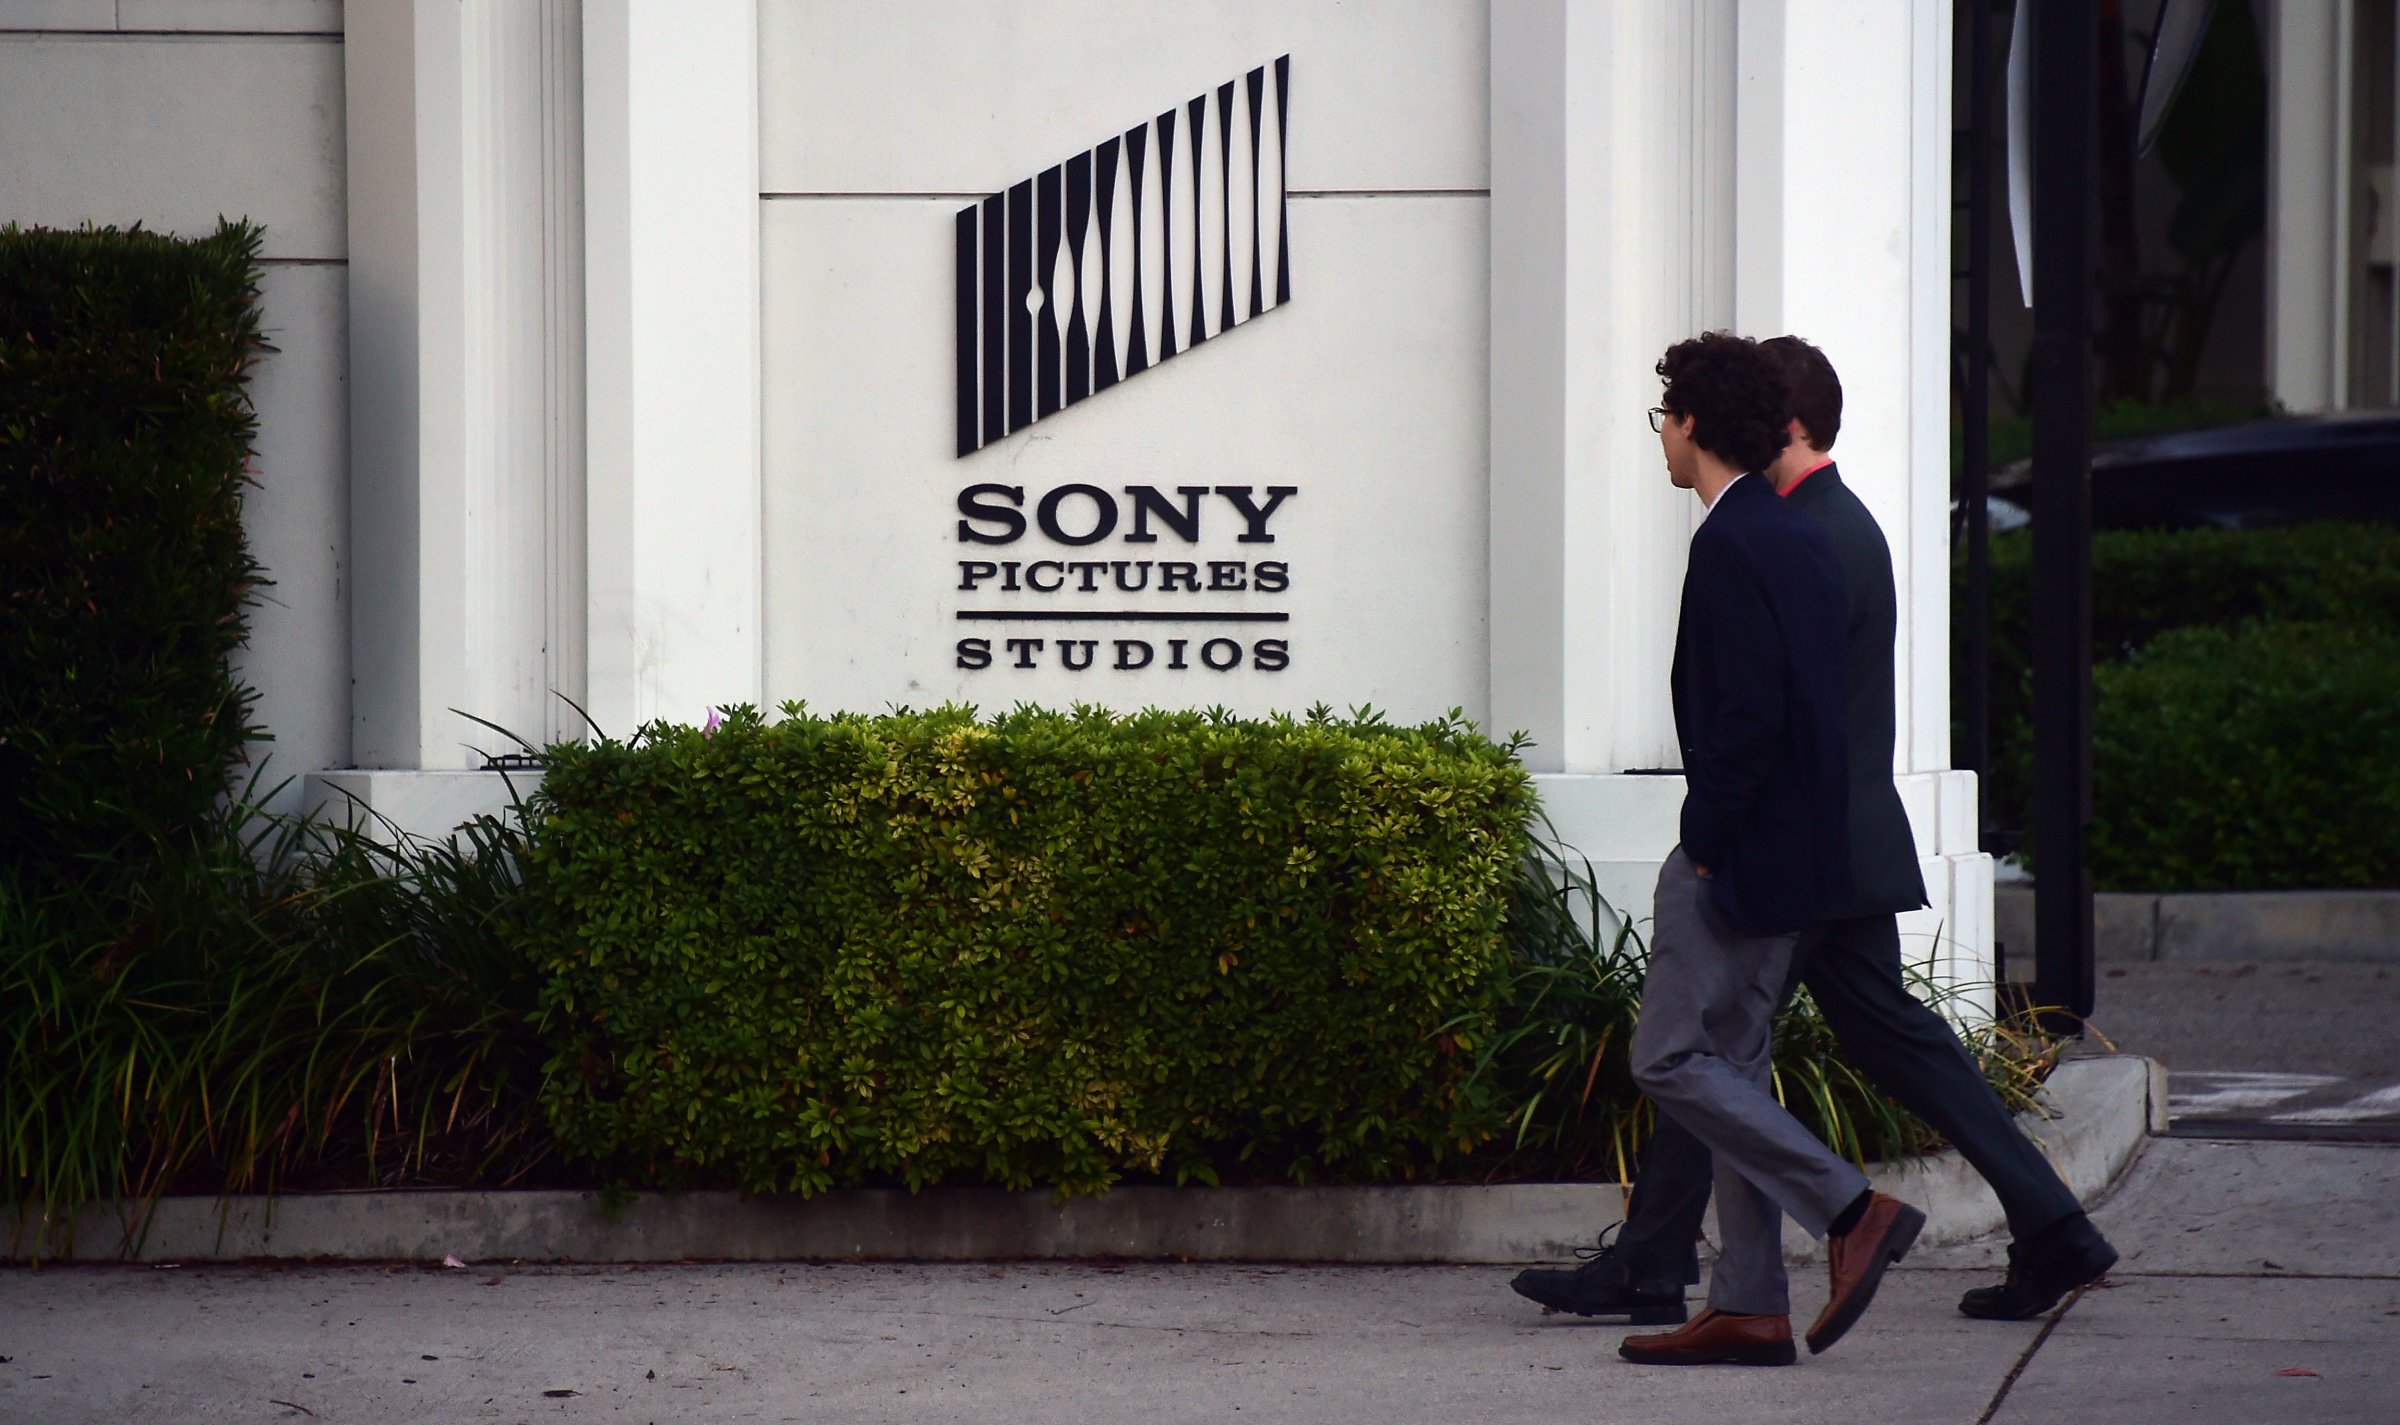 Sony Pictures Studios in Los Angeles, Ca. on Dec. 4, 2014.